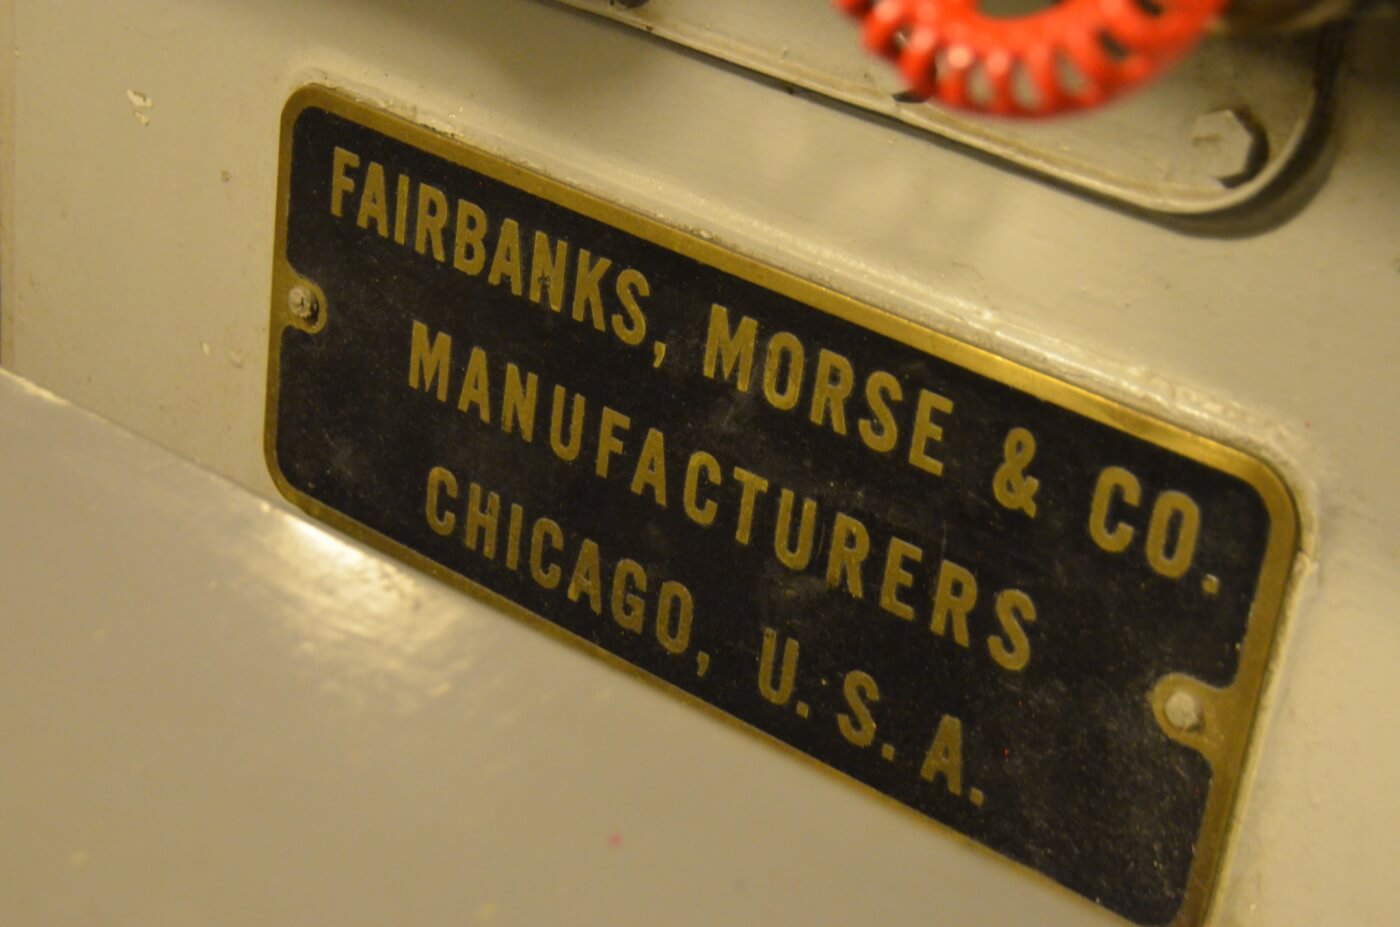 Fairbanks, Morse & Co.